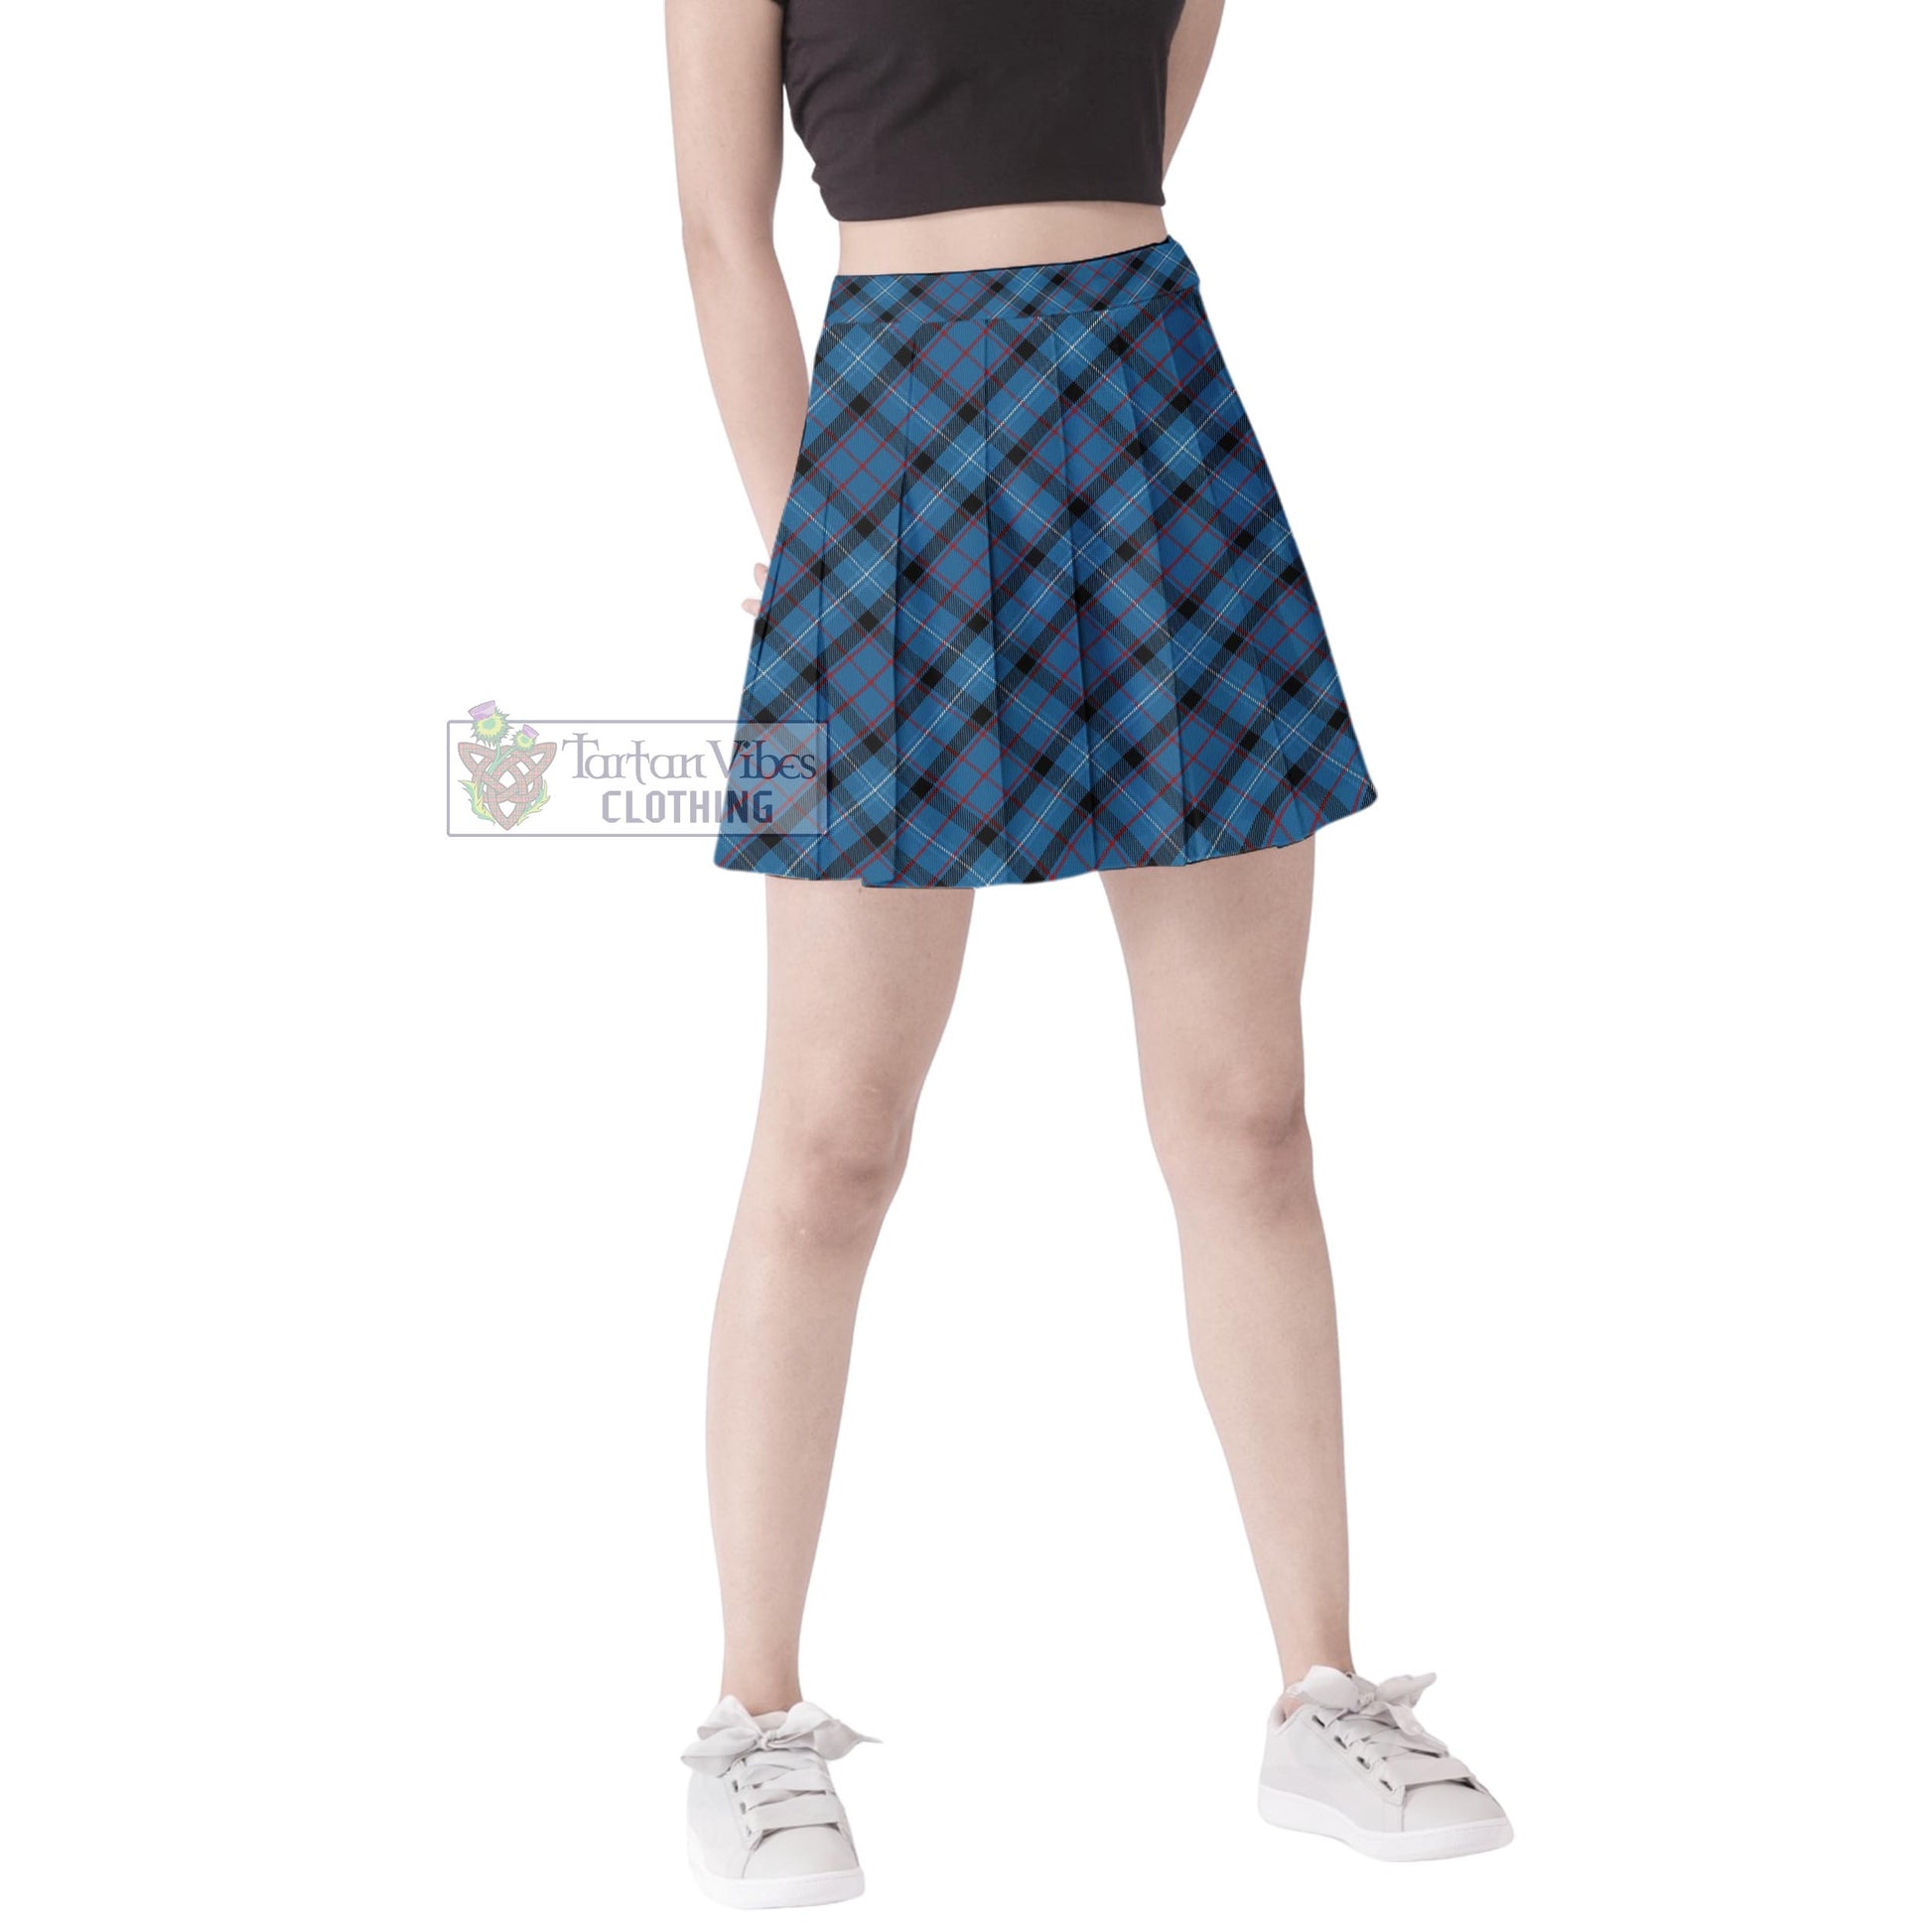 Tartan Vibes Clothing Fitzgerald Family Tartan Women's Plated Mini Skirt